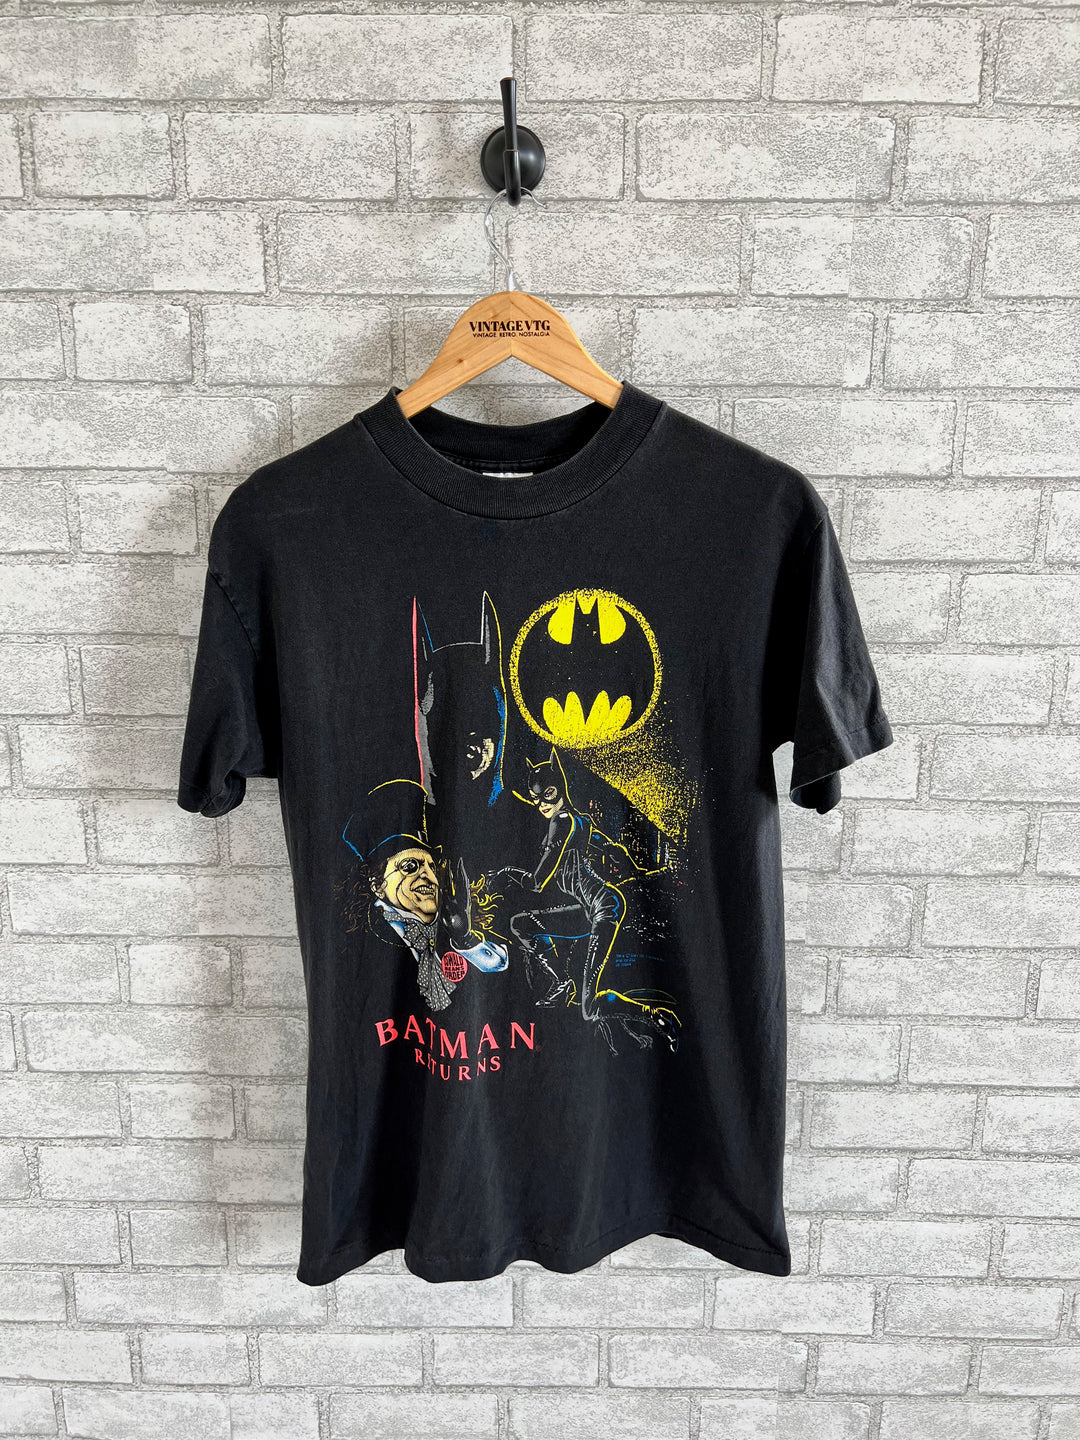 Vintage 1991 Batman Returns movie T-shirt. Medium